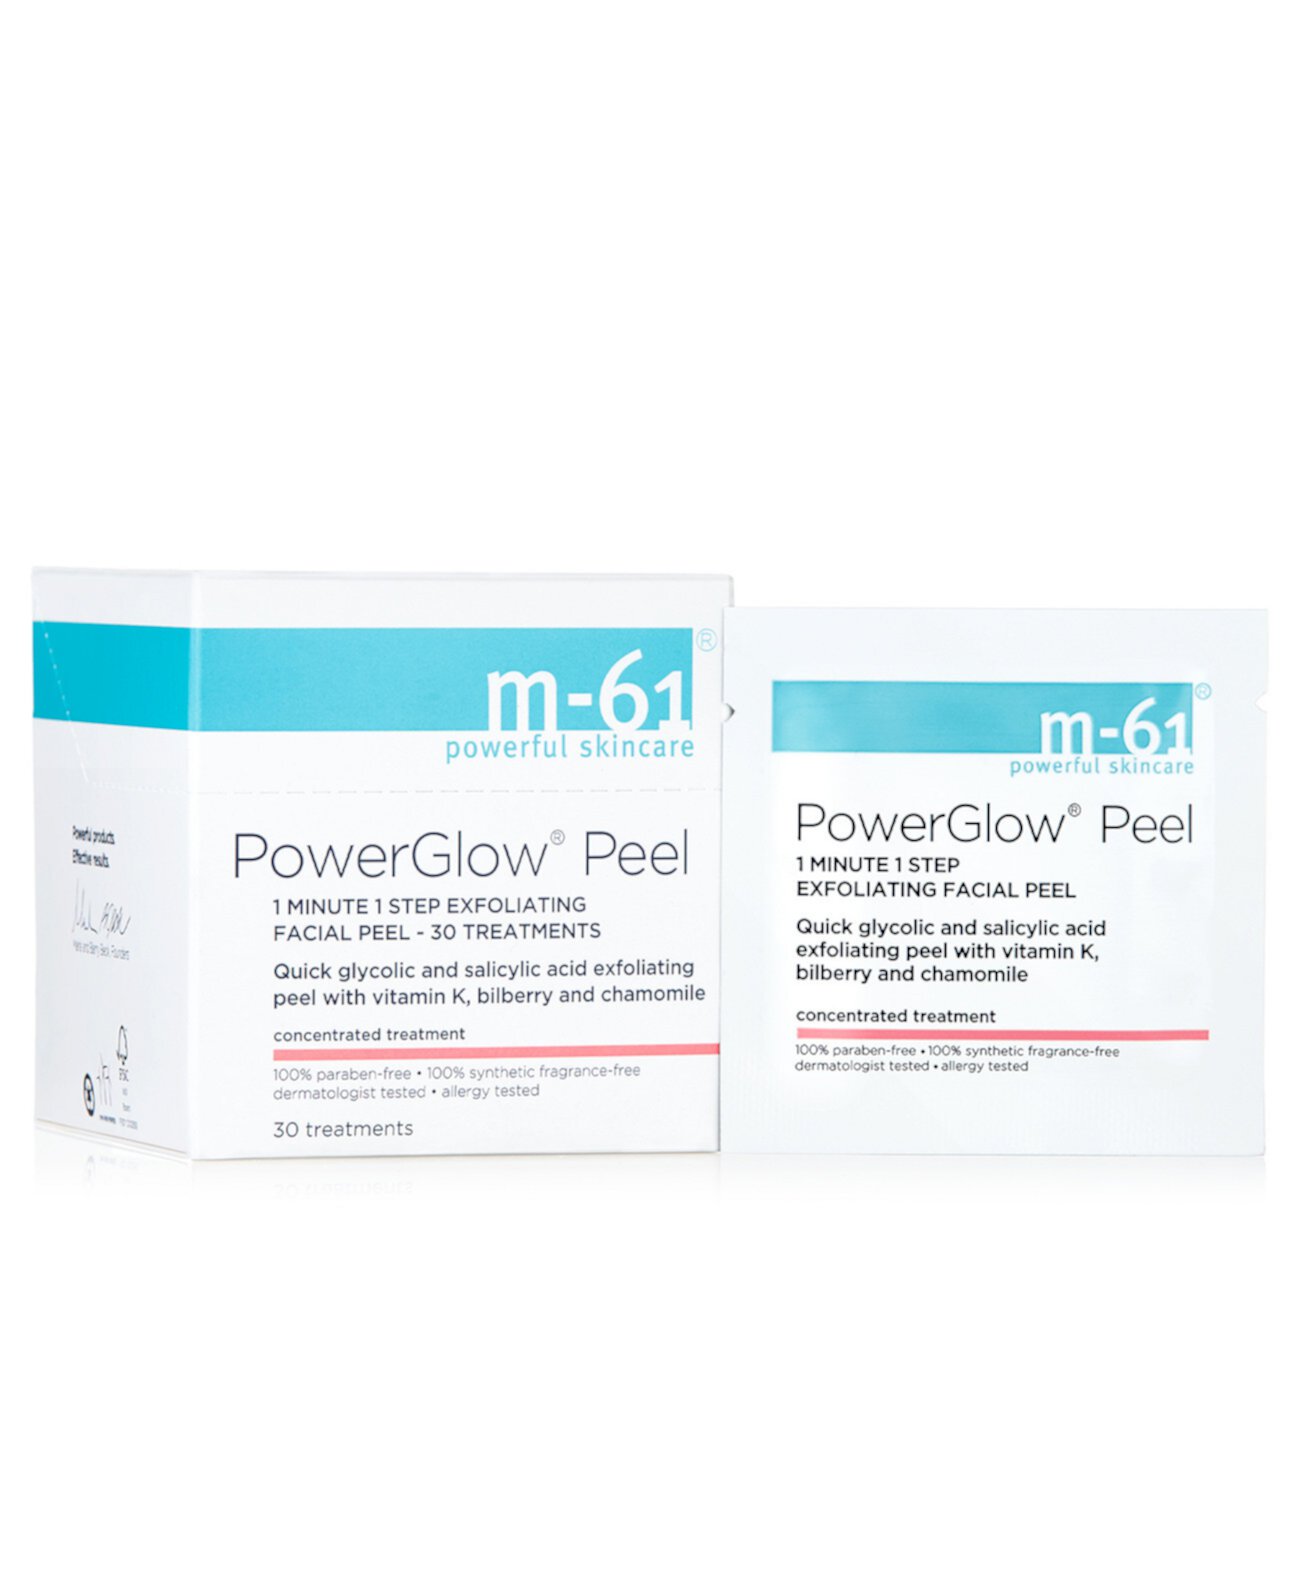 PowerGlow Peel 1-минутный одноэтапный отшелушивающий пилинг для лица - 30 процедур M-61 by Bluemercury